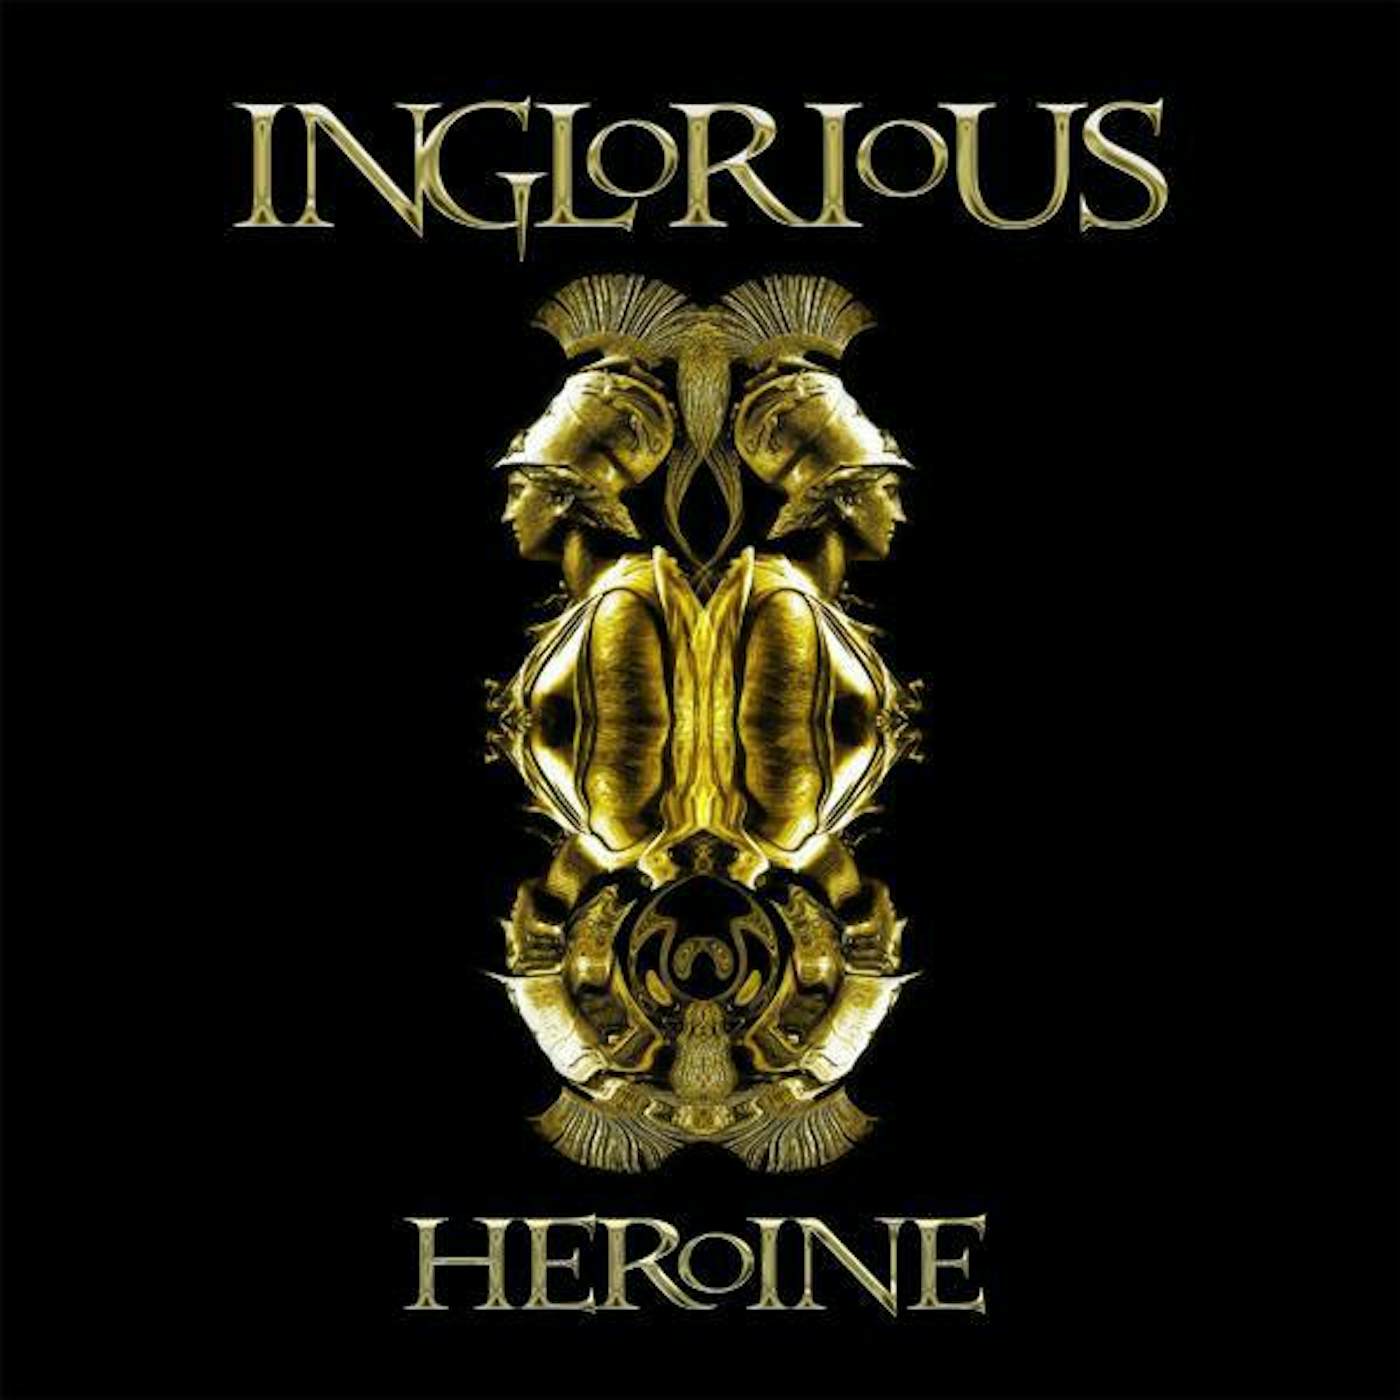 Inglorious HEROINE (BLUE VINYL/LIMITED) Vinyl Record